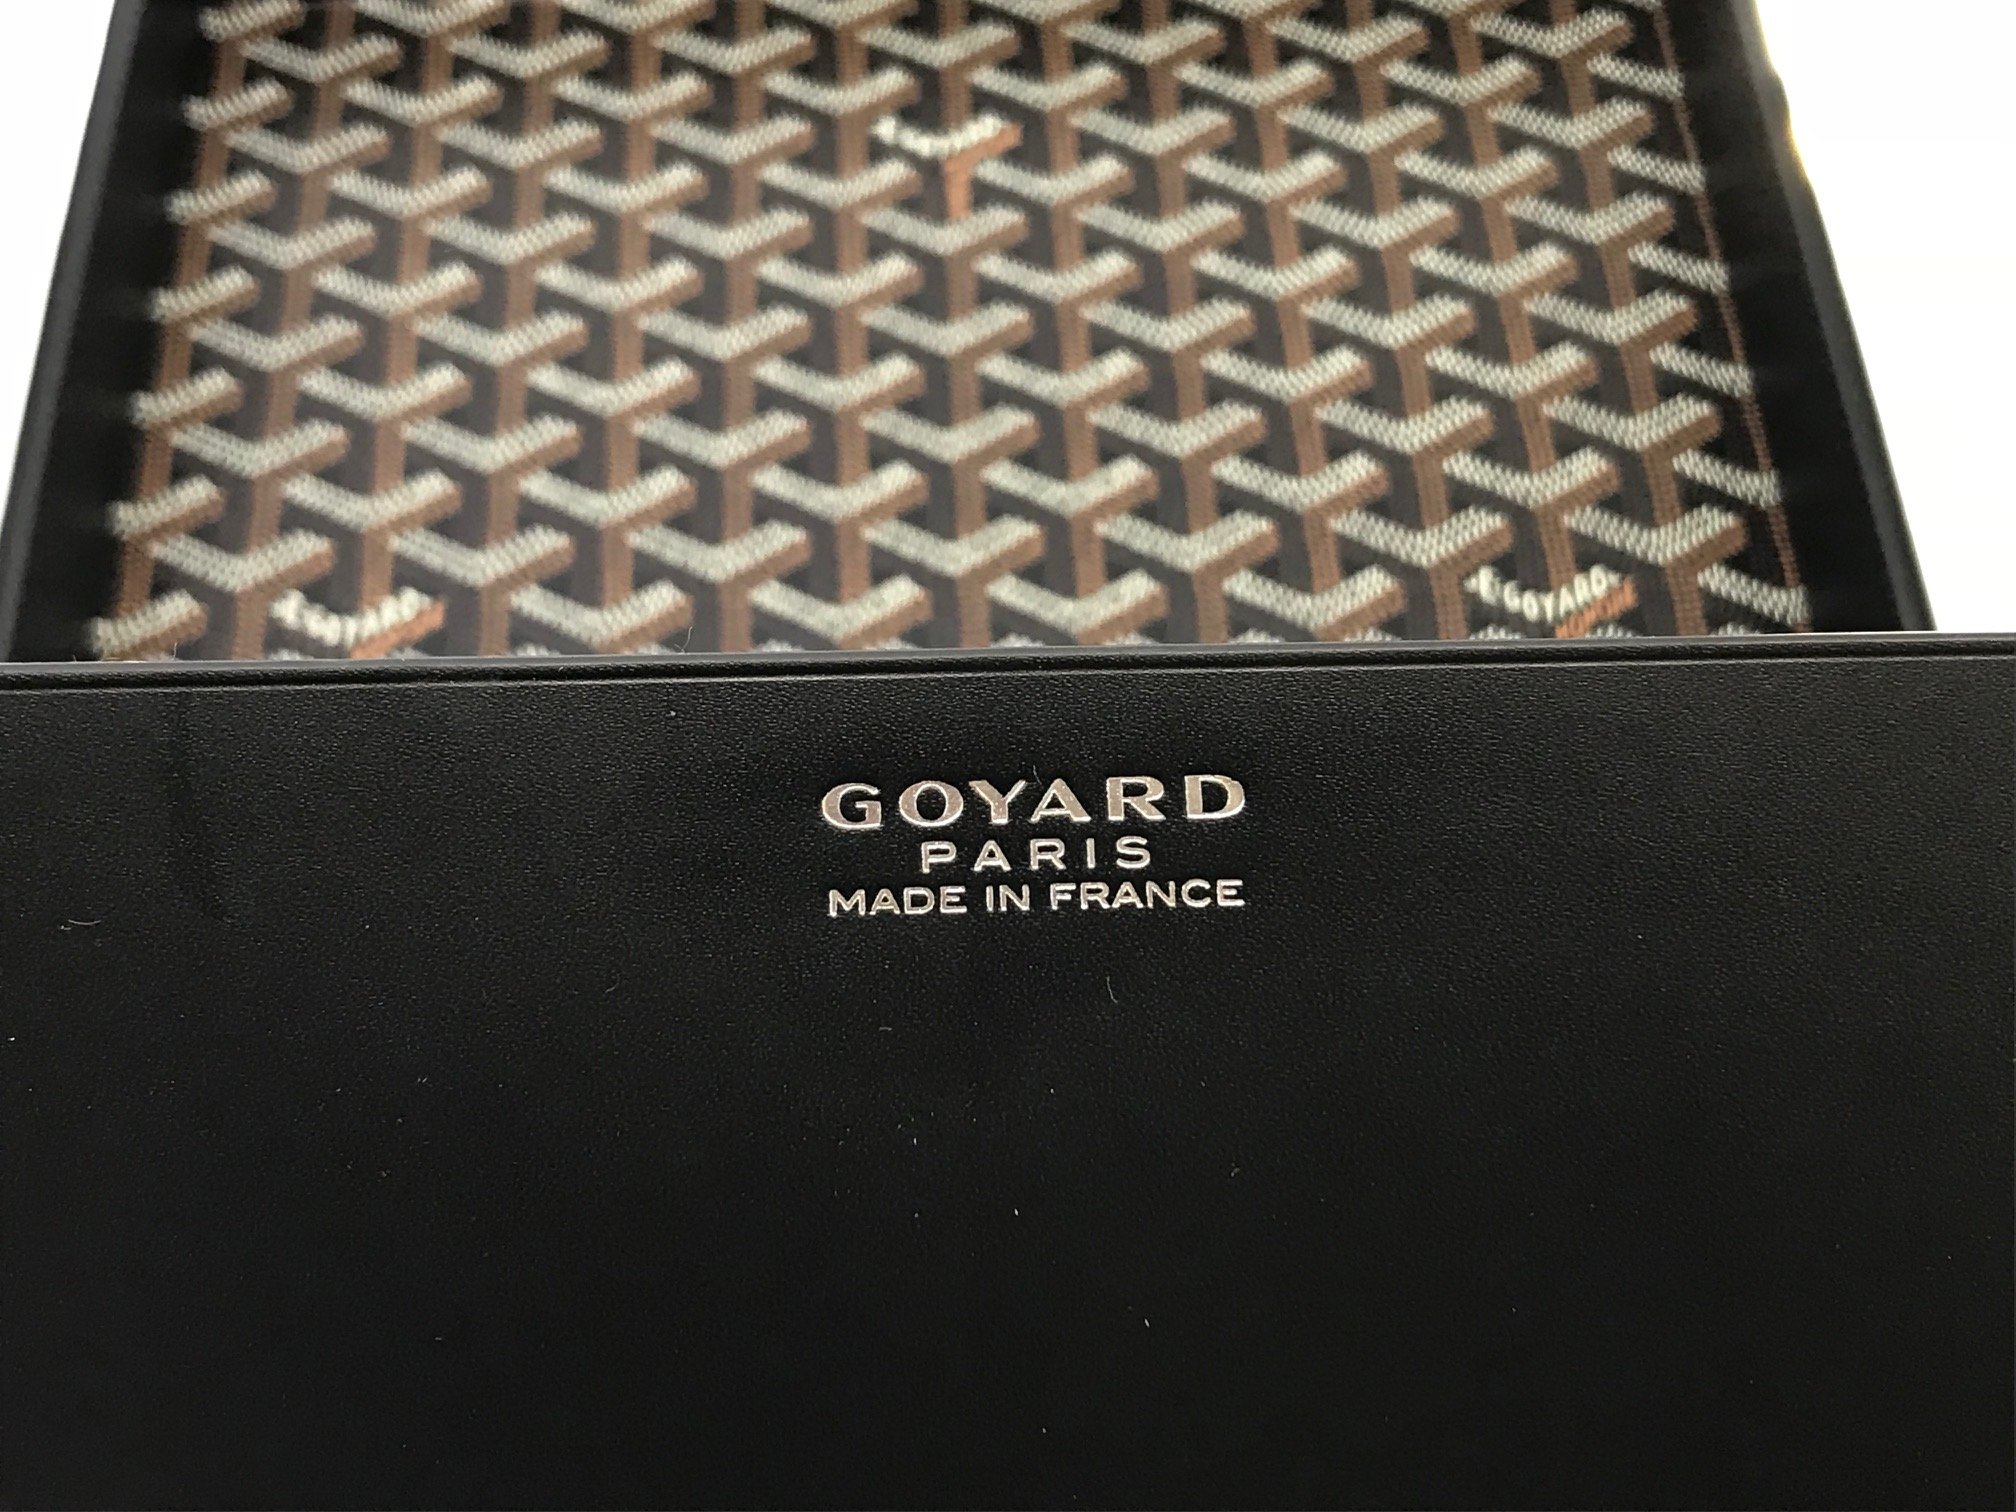 Goyard Black & Tan Watch Box - 8 - DavidSW